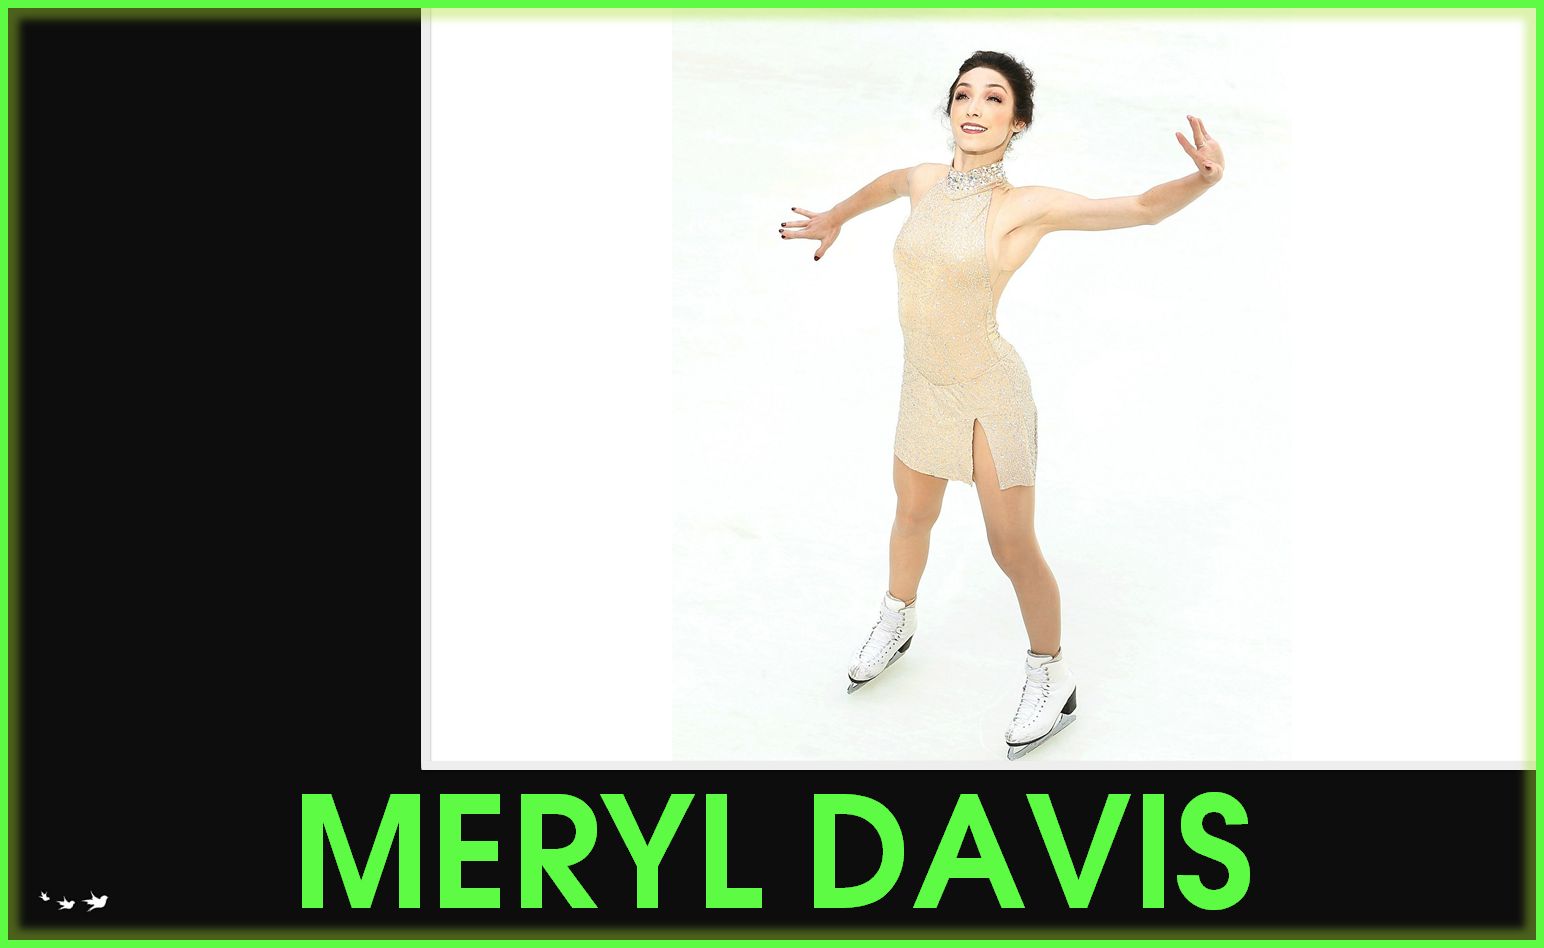 Meryl Davis Gold Medalist Olympian Ep 60 The Travel Wins